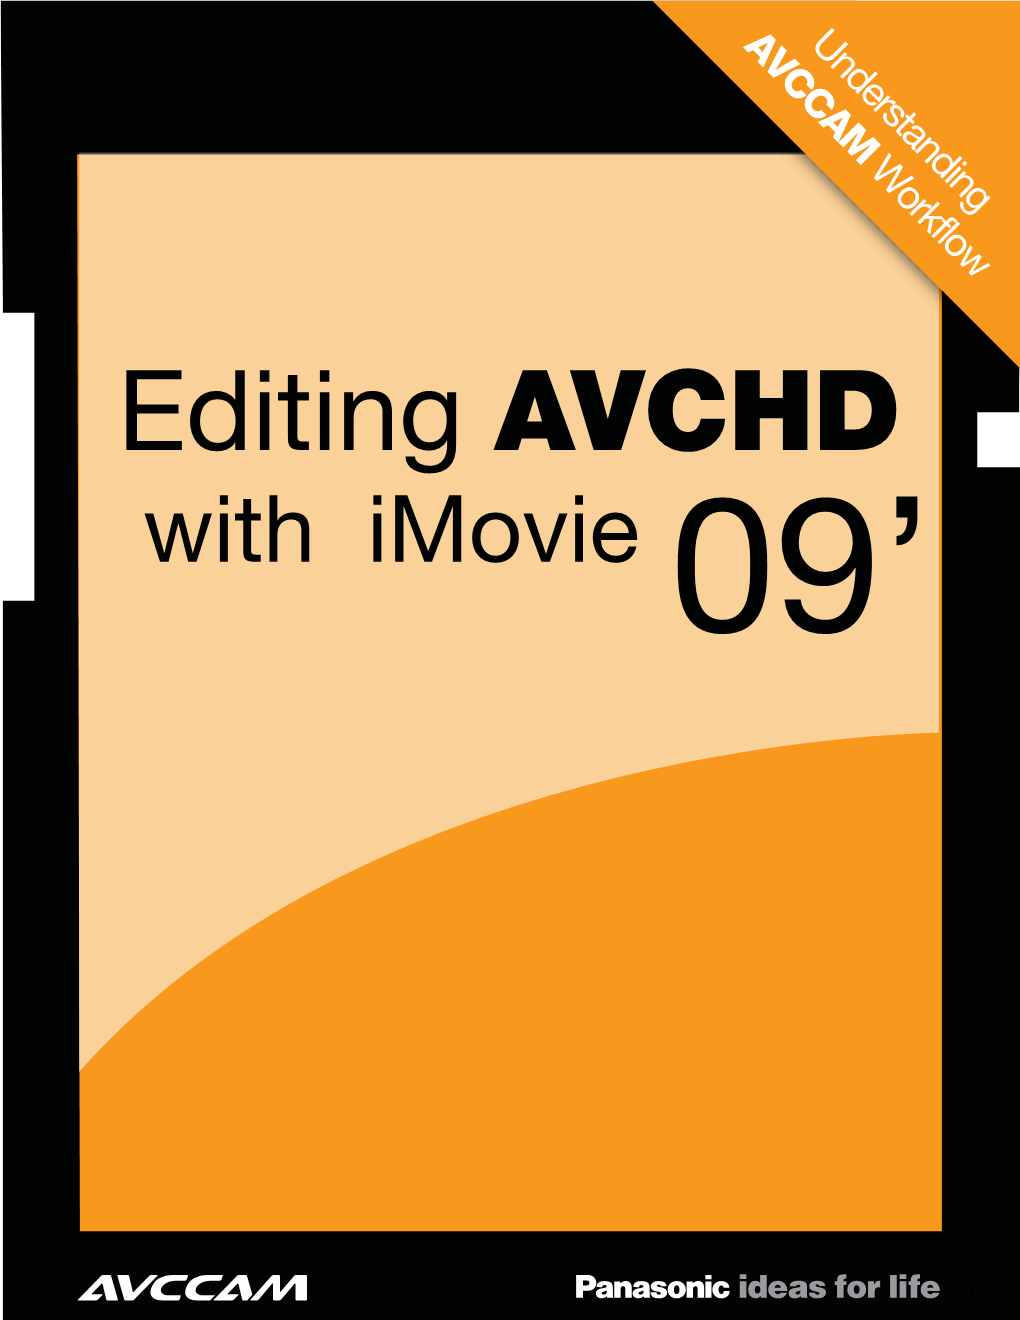 Editing AVCHD with Imovie 09’